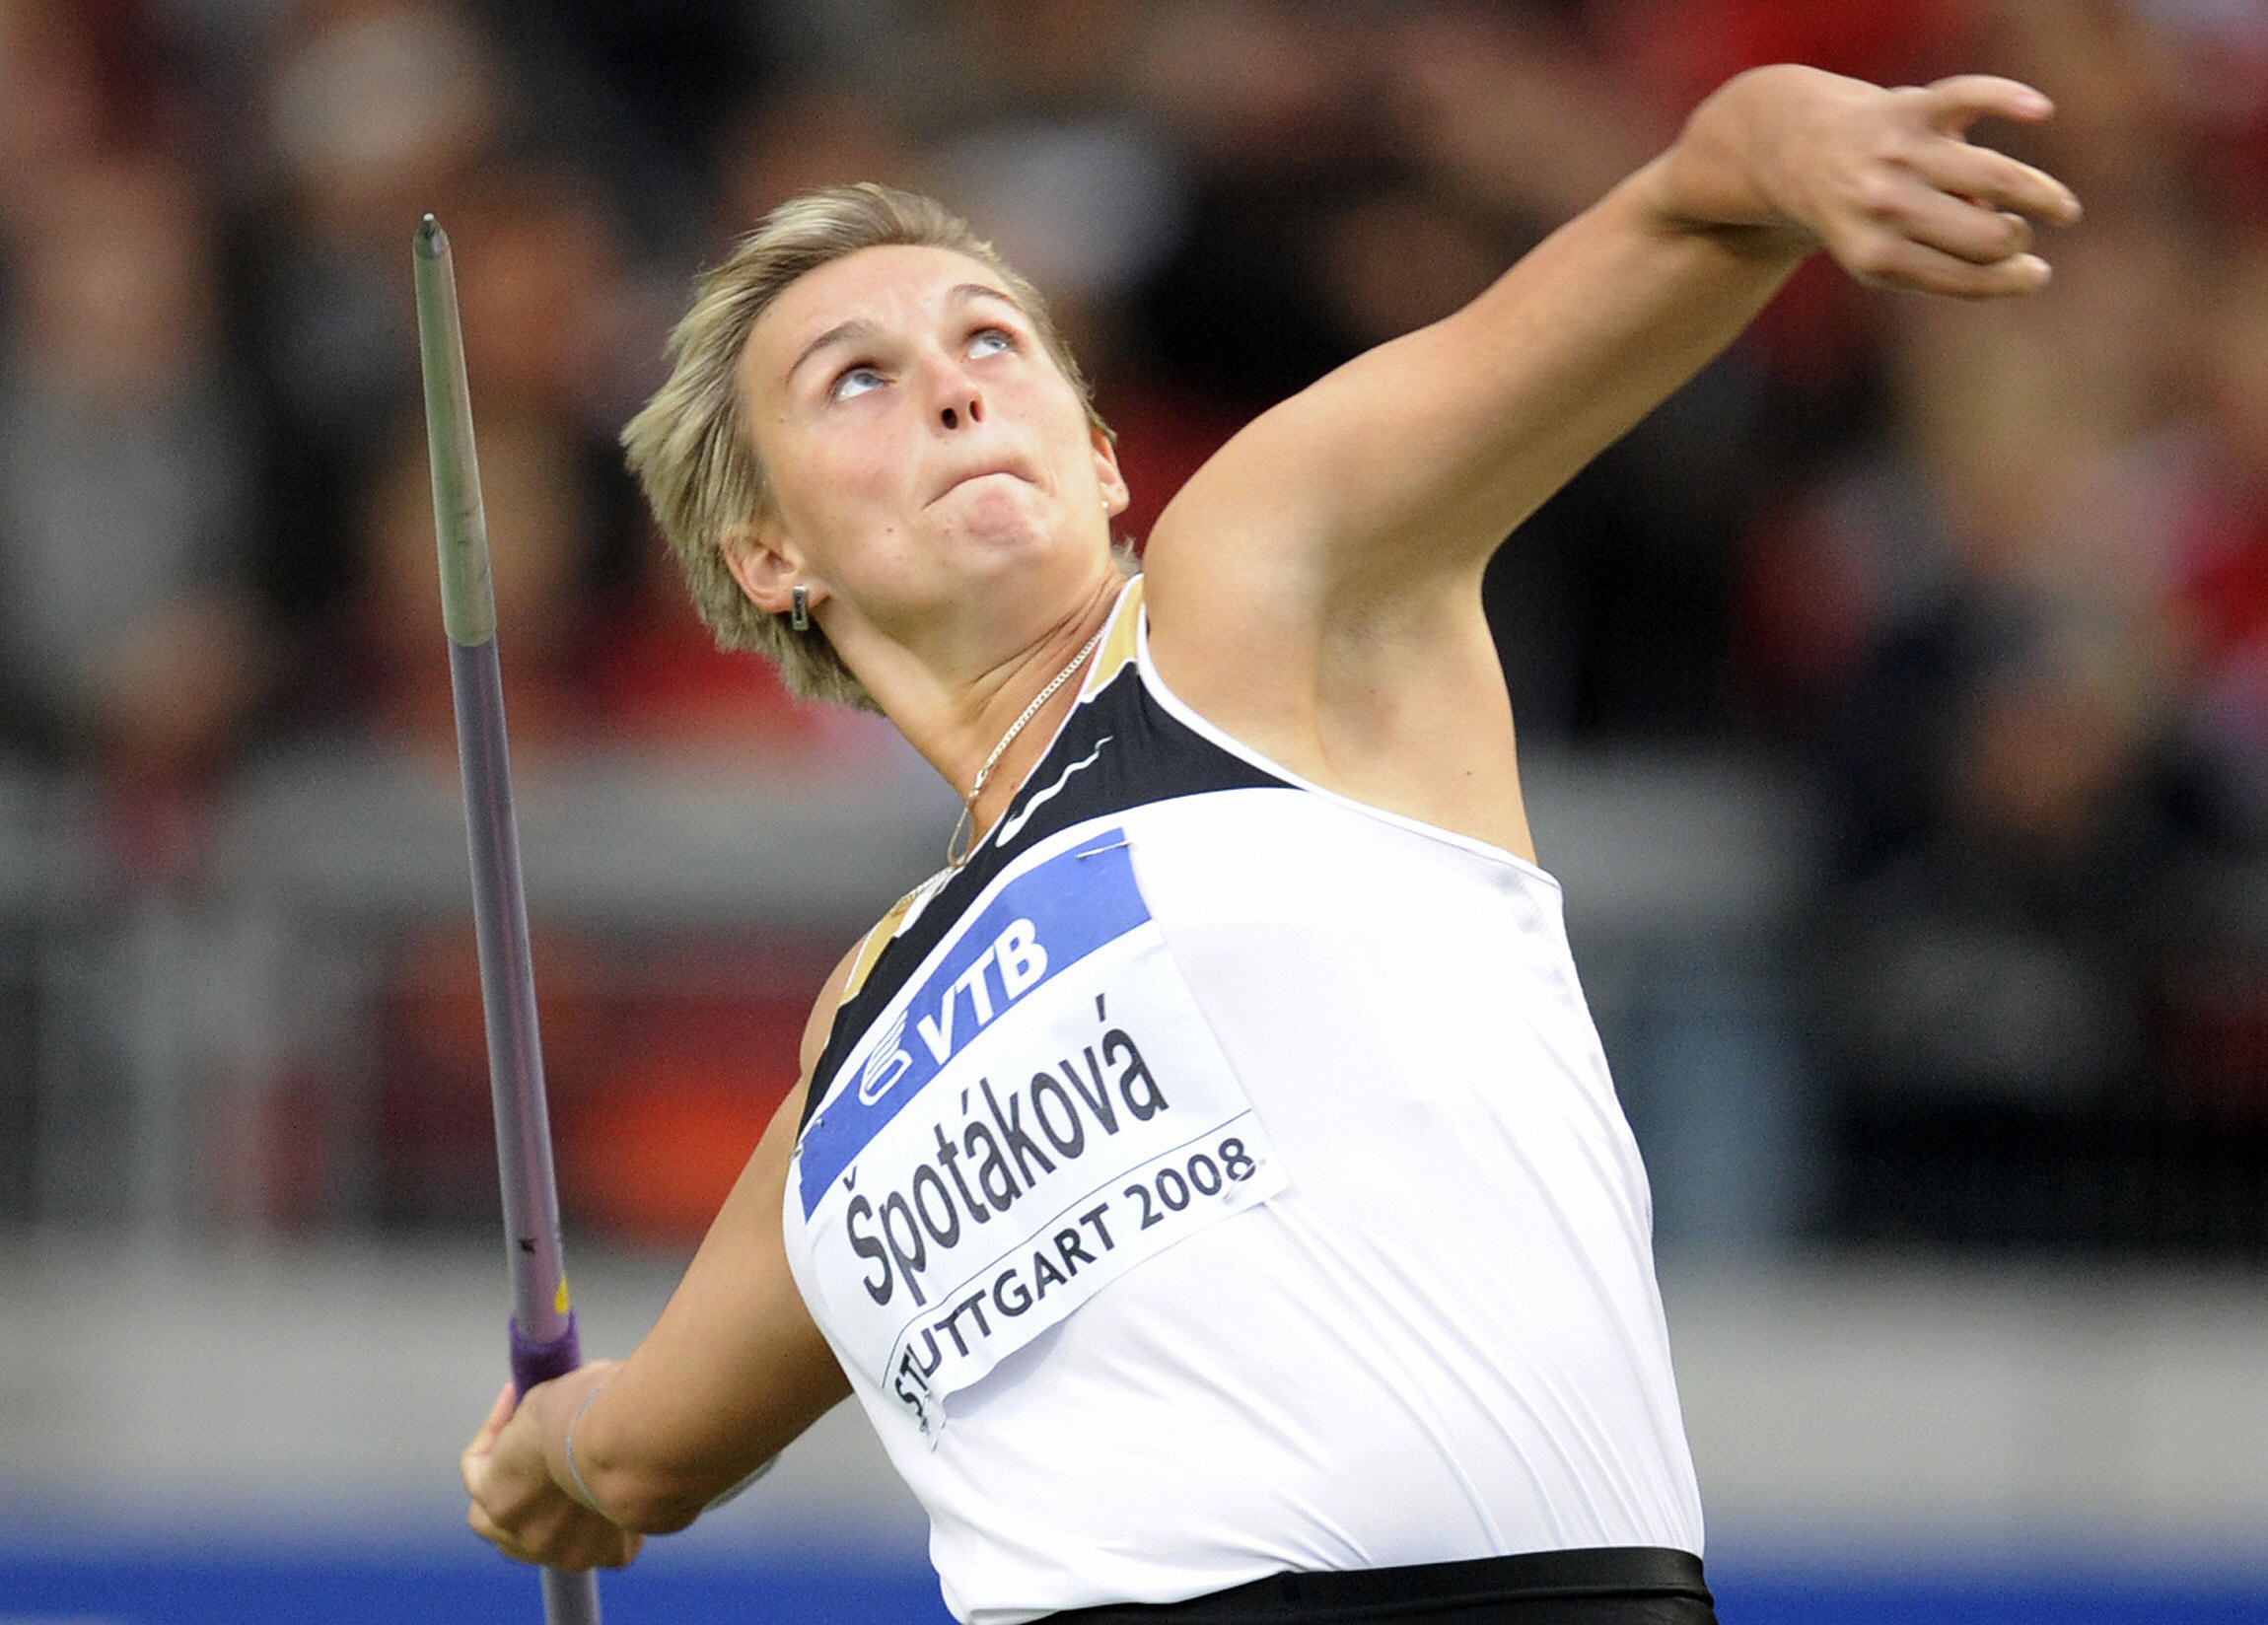 Barbora Spotakova at the 2008 World Athletics Final in Stuttgart